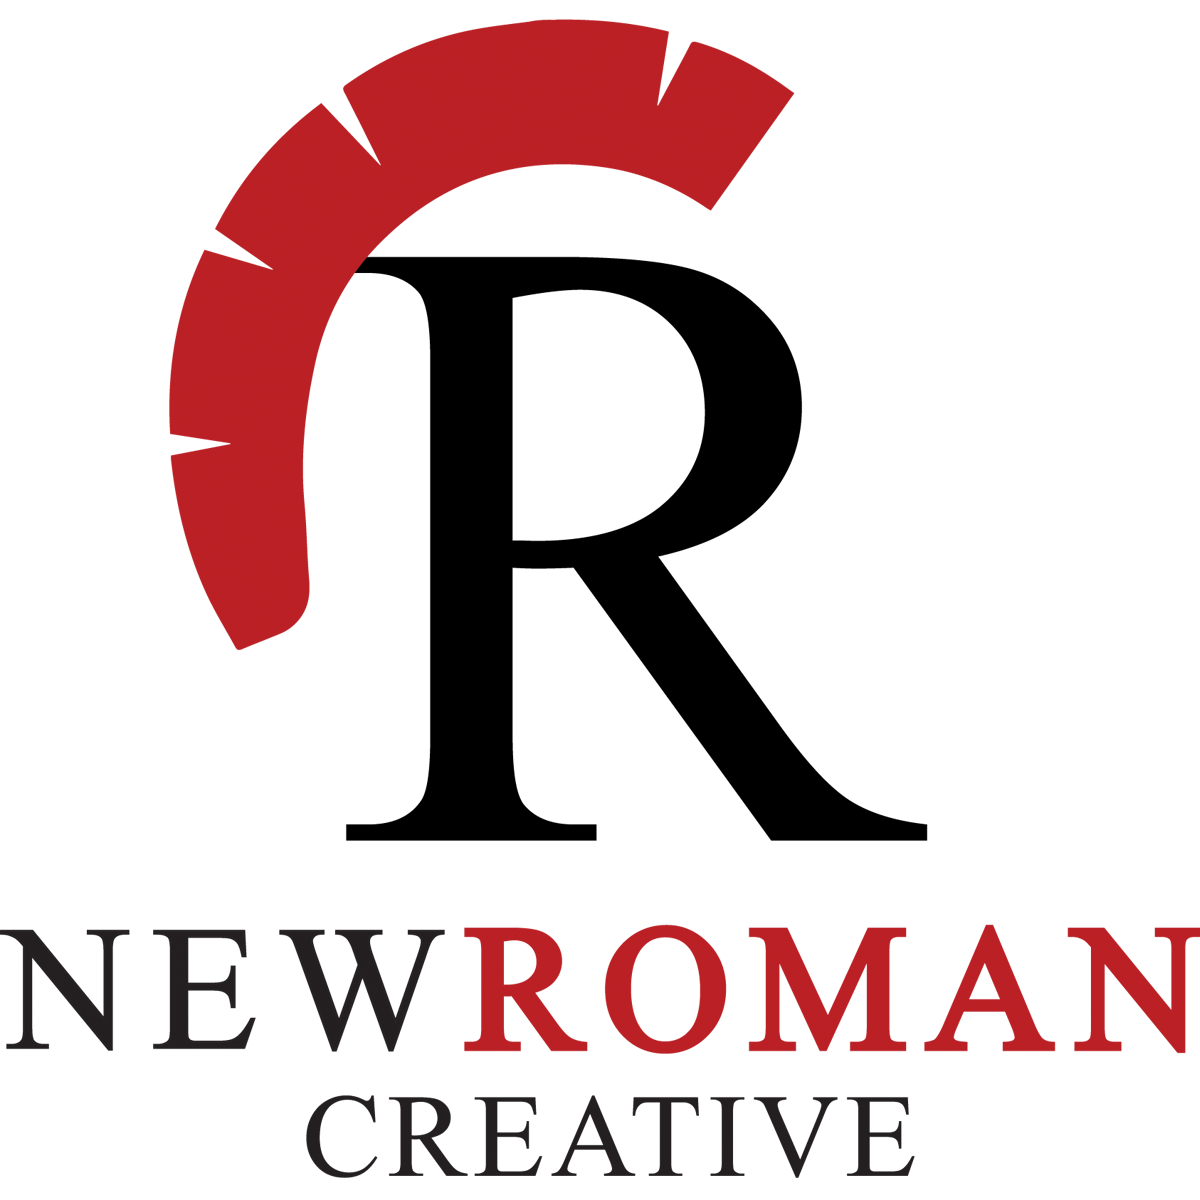 NEW ROMAN CREATIVE